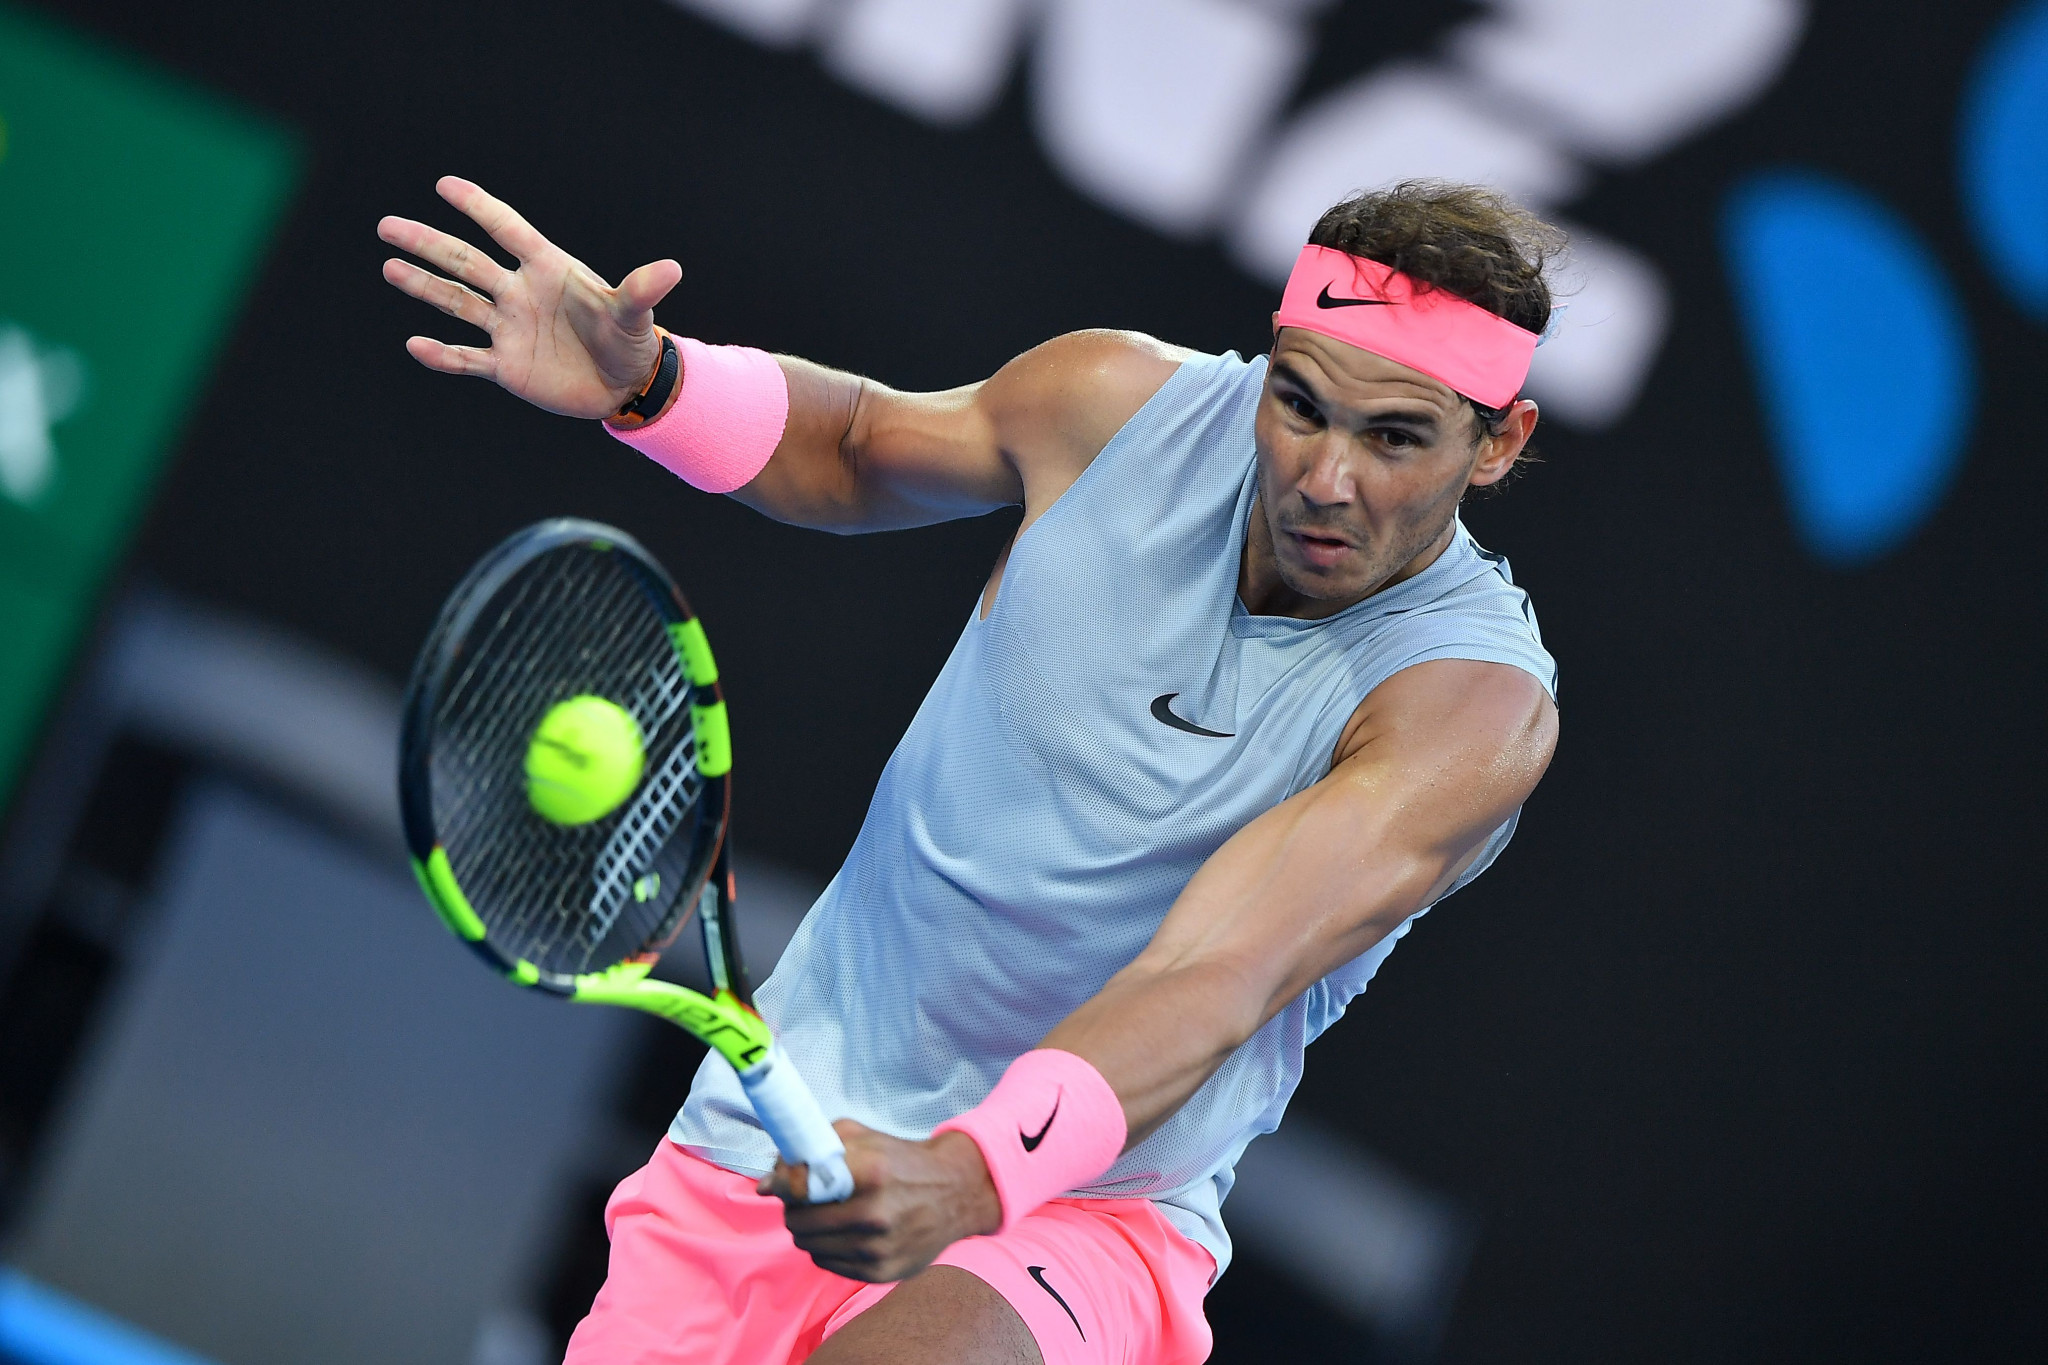 Nadal among winners on first day of Australian Open